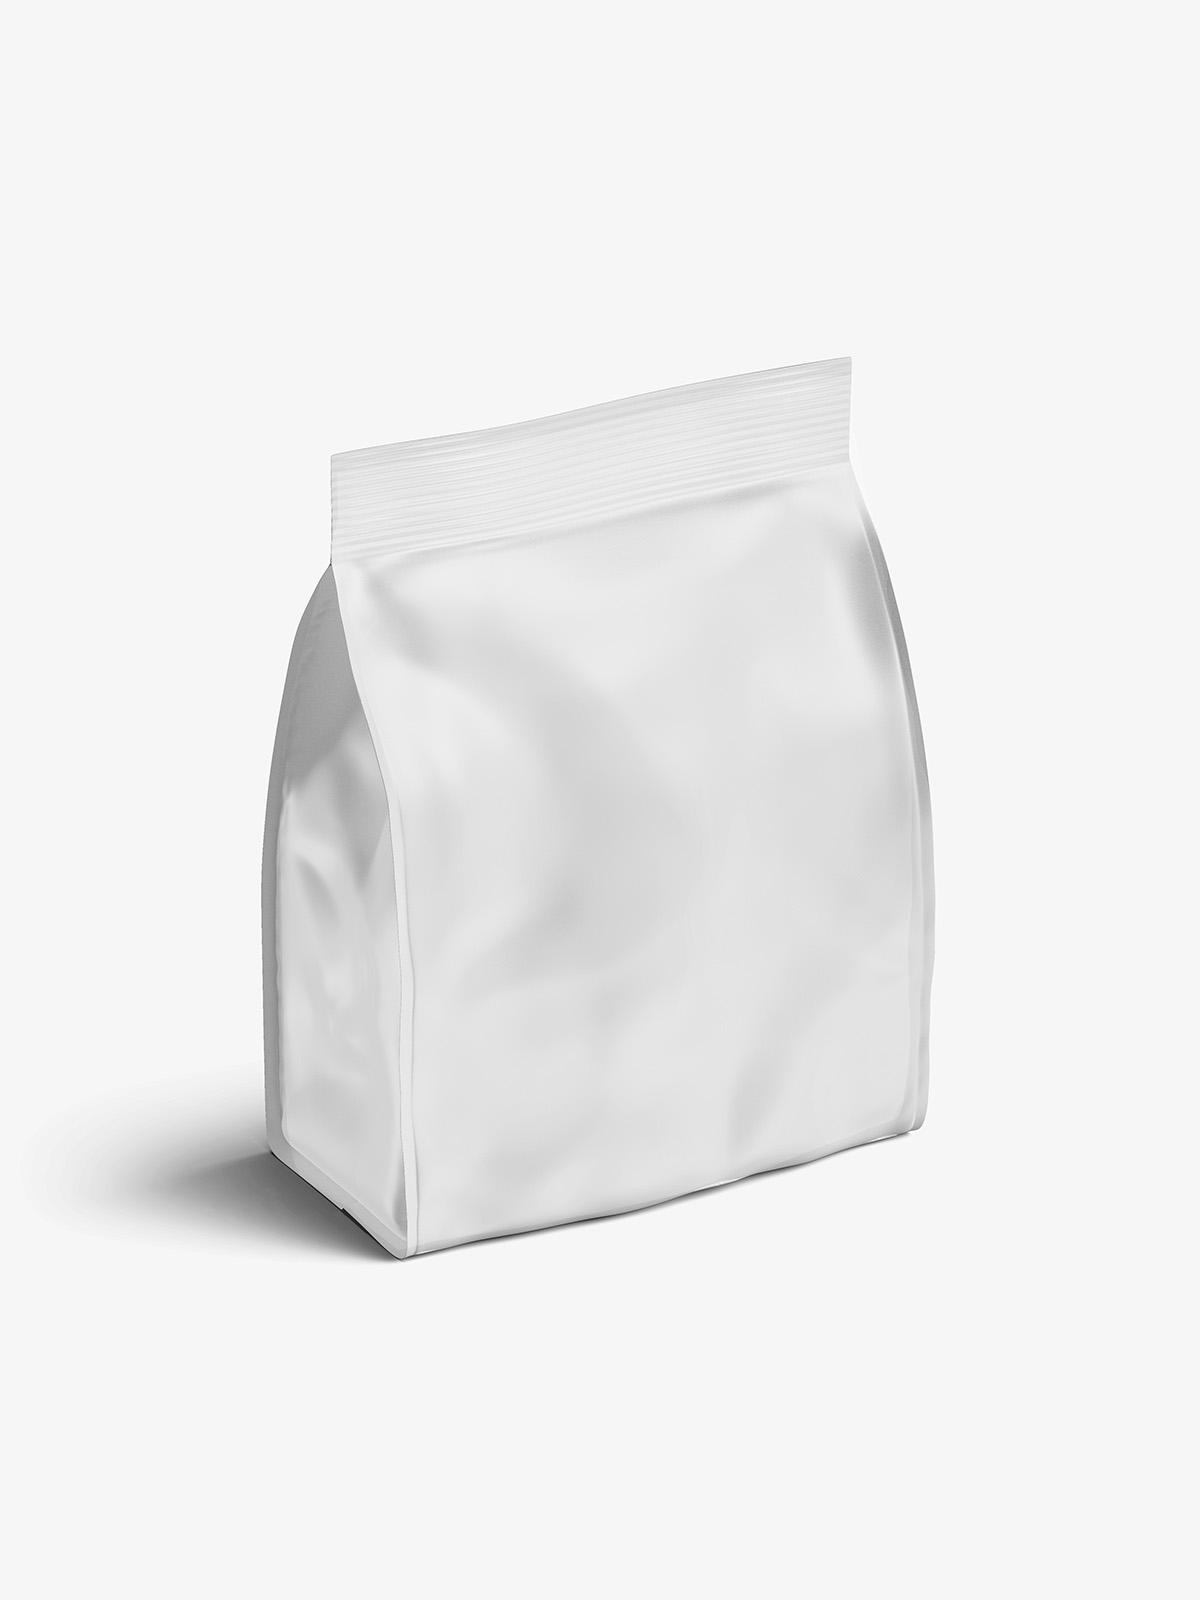 Download Matt food bag mockup - Smarty Mockups